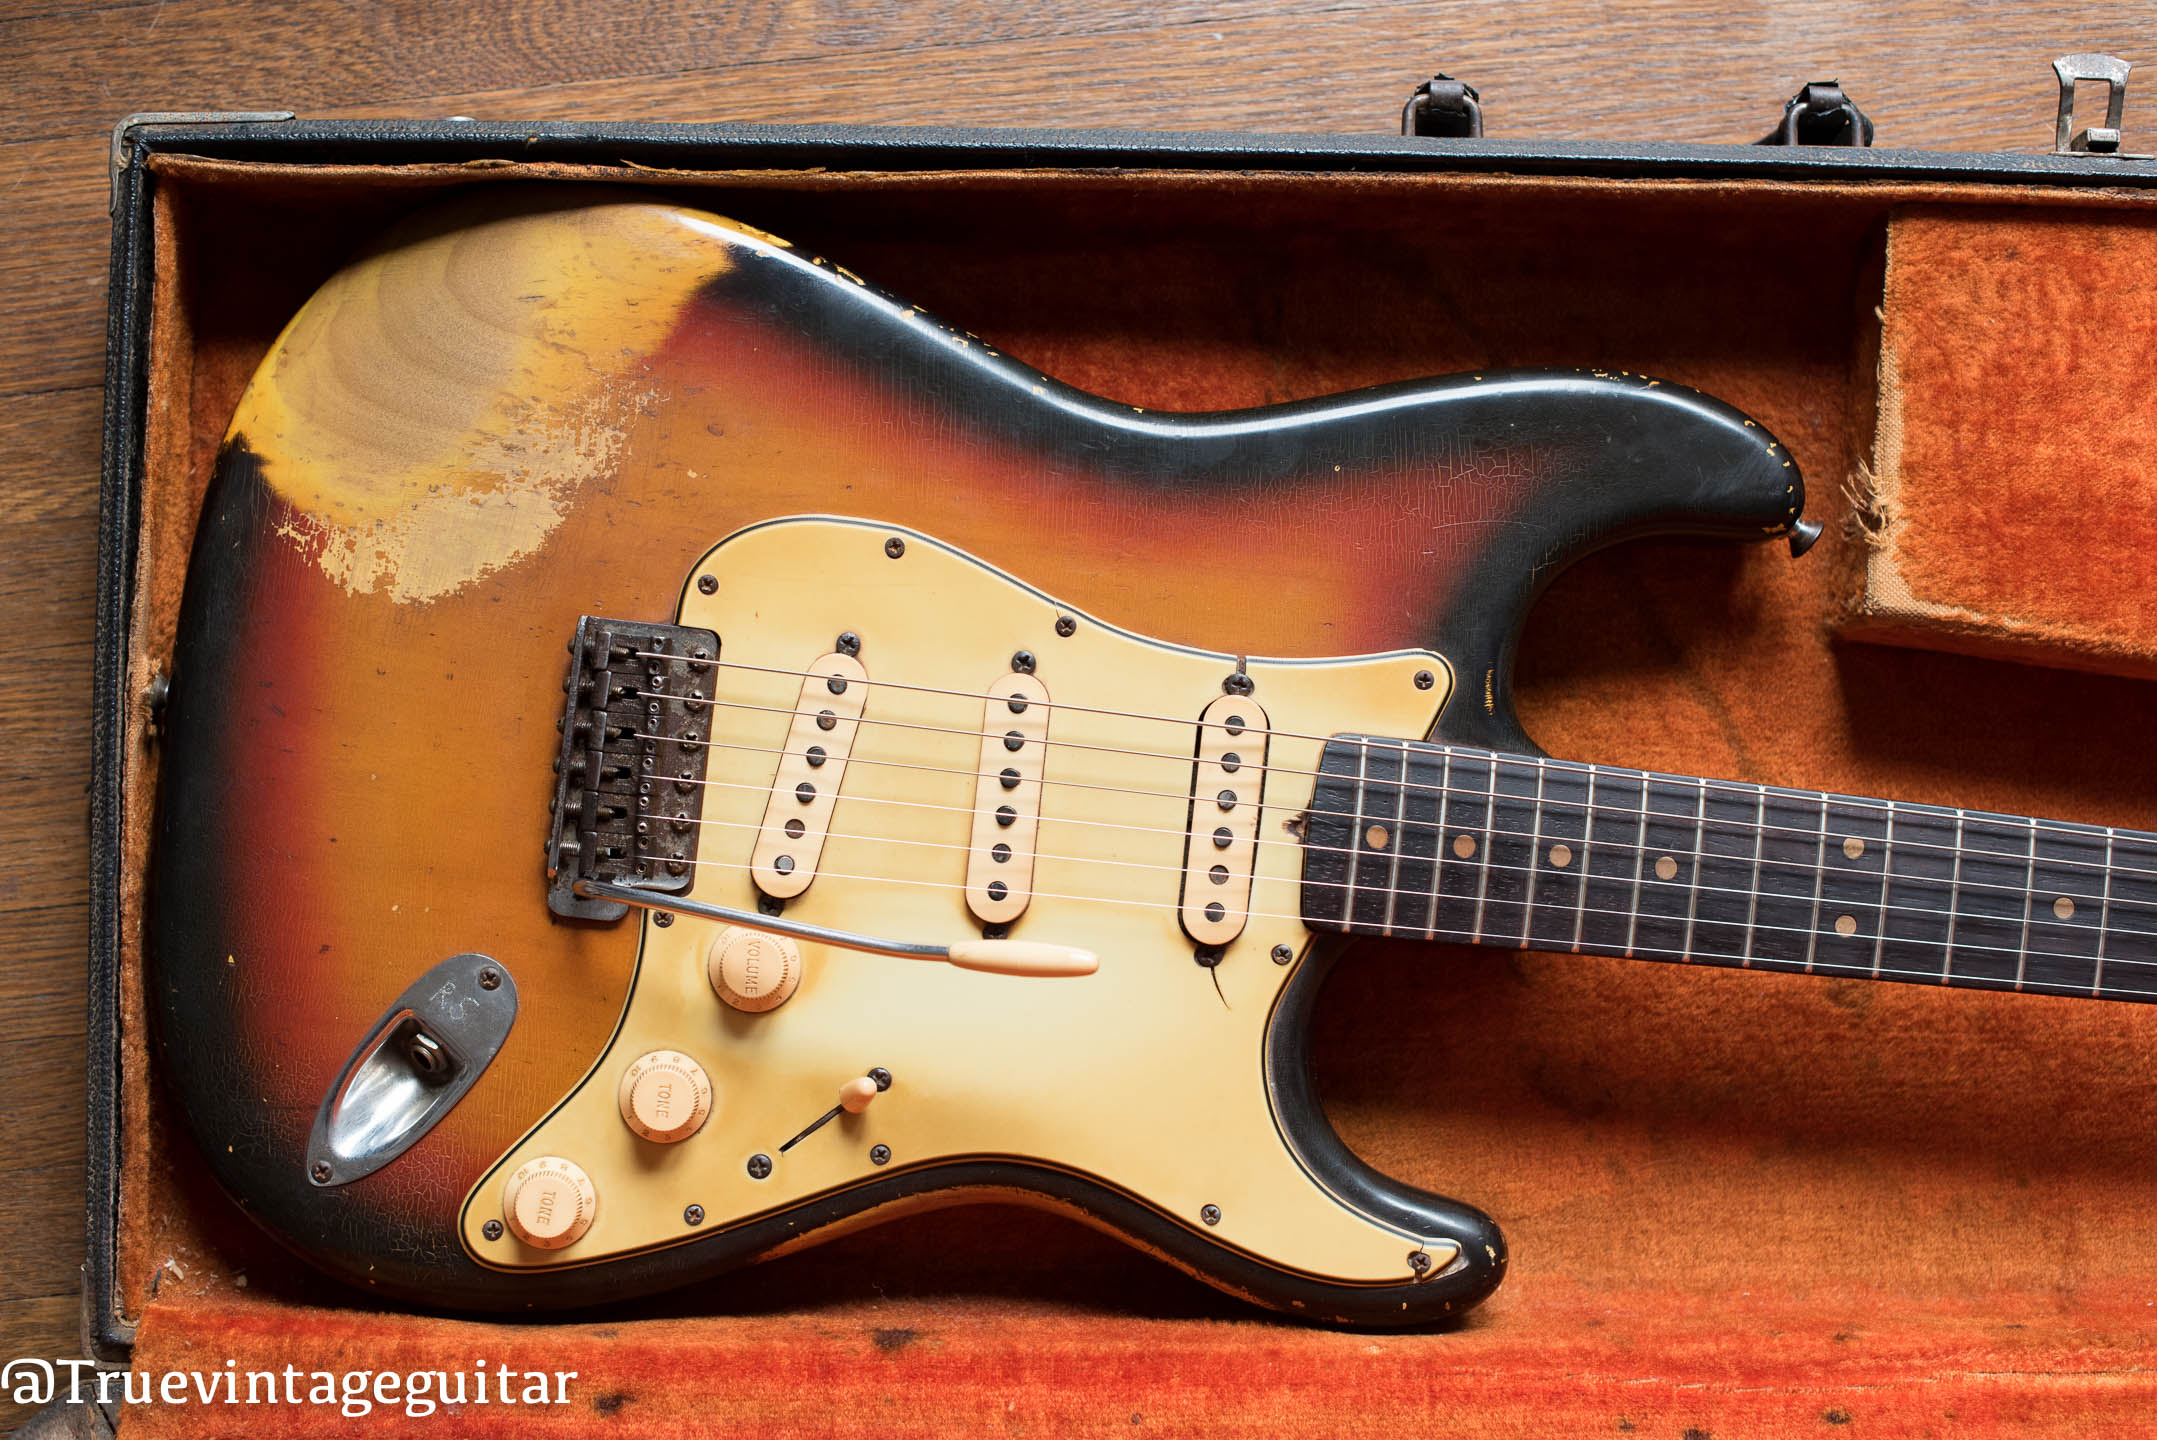 Vintage 1964 Fender Stratocaster with Sunburst finish and mint green pickguard